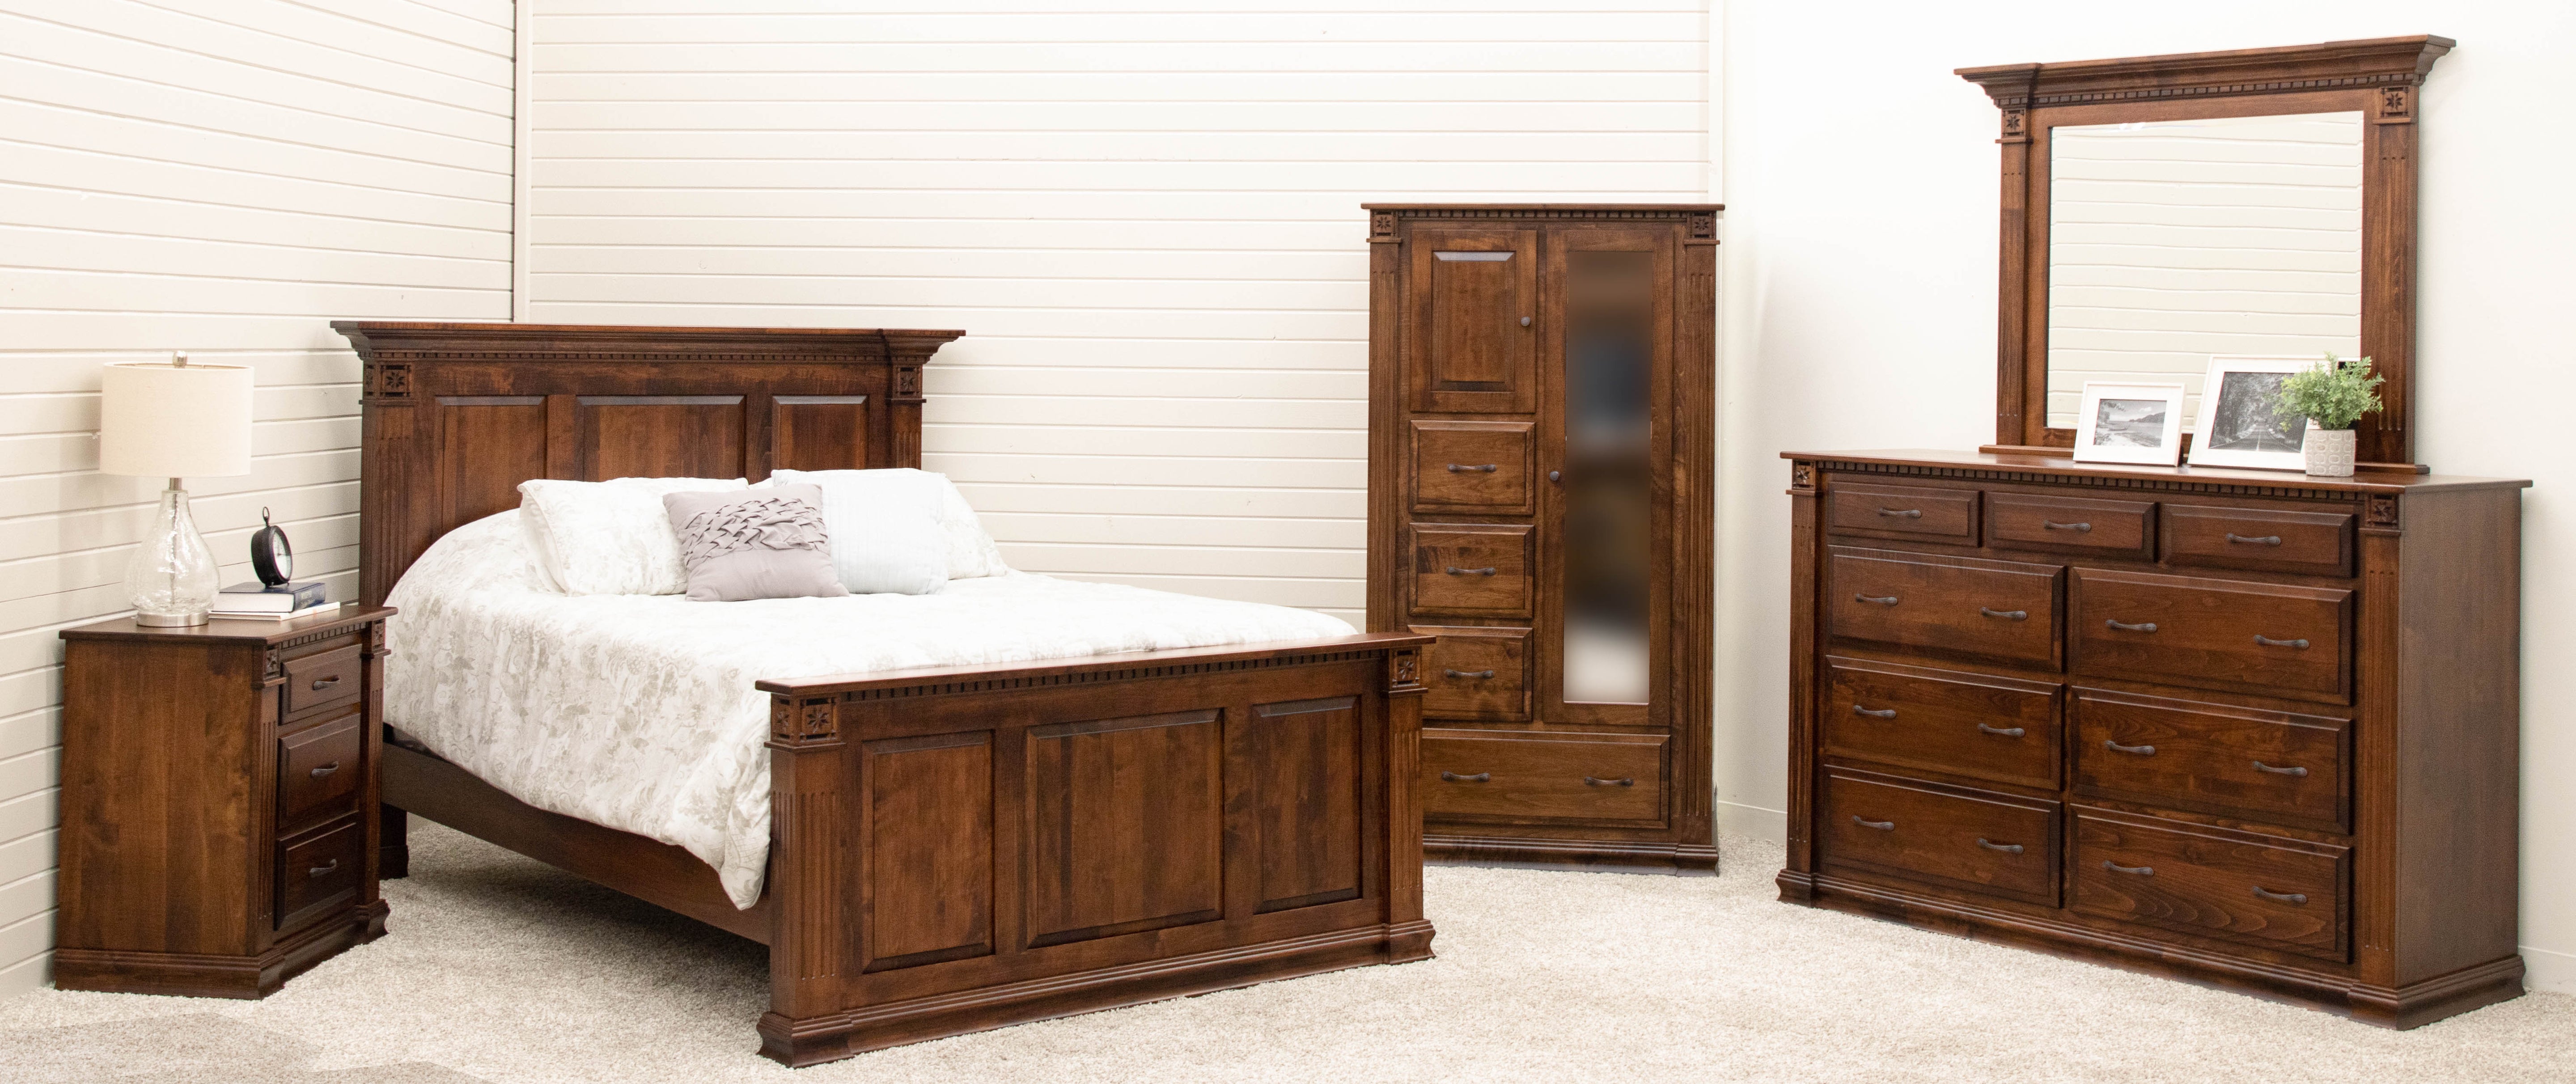 Heirloom Traditional Style Bedroom Set